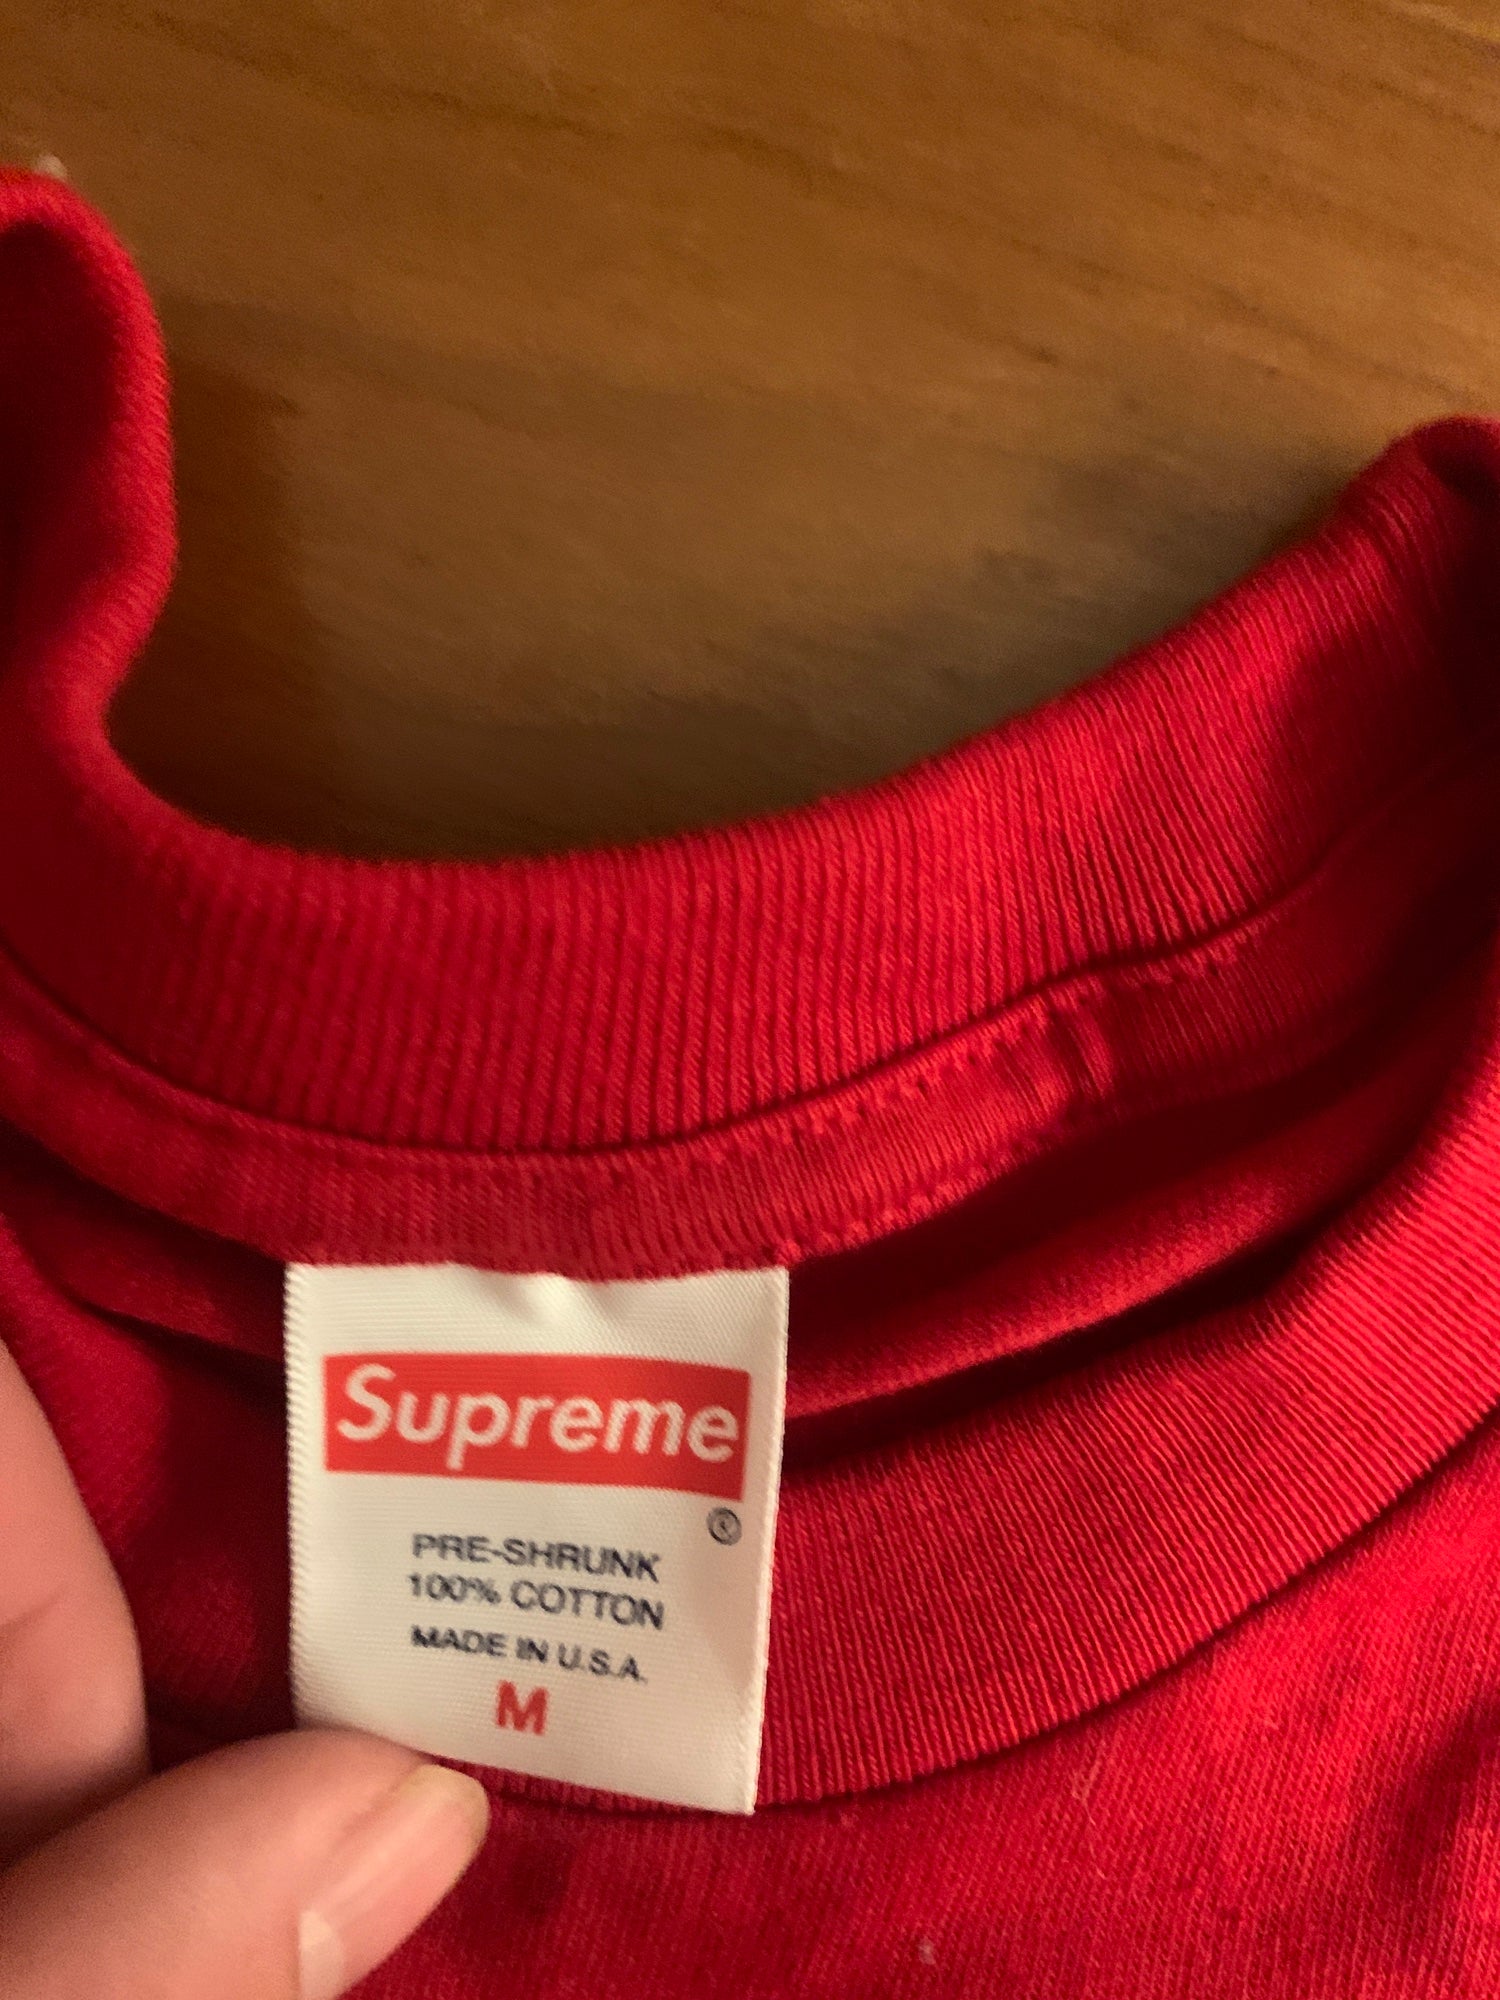 supreme red shirt